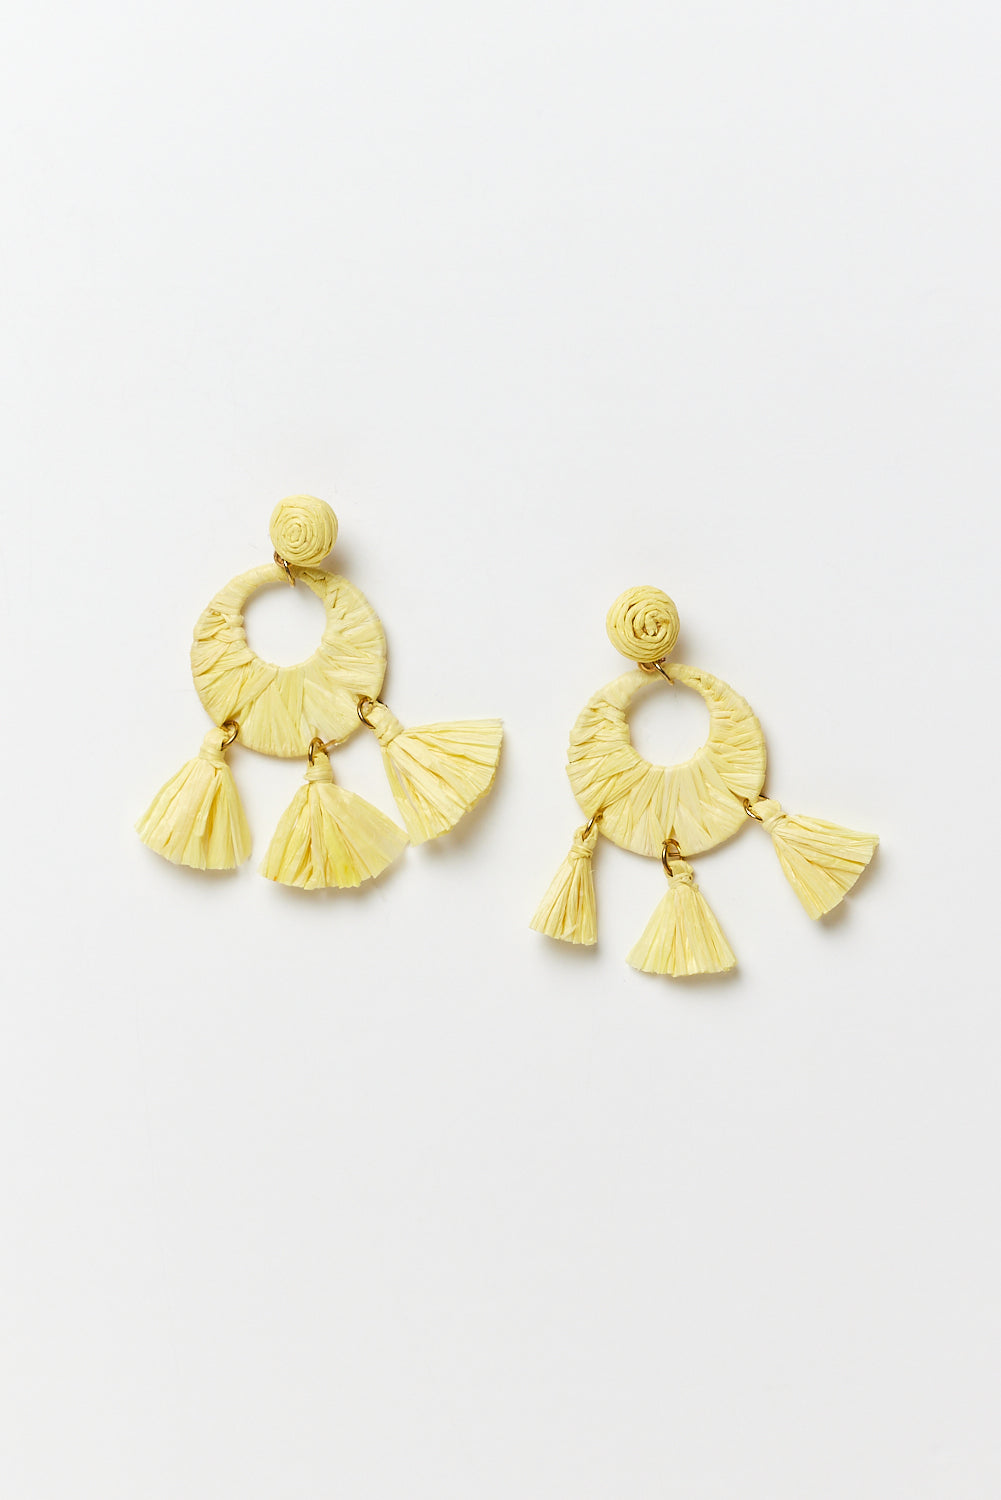 Willow Earrings in Yellow